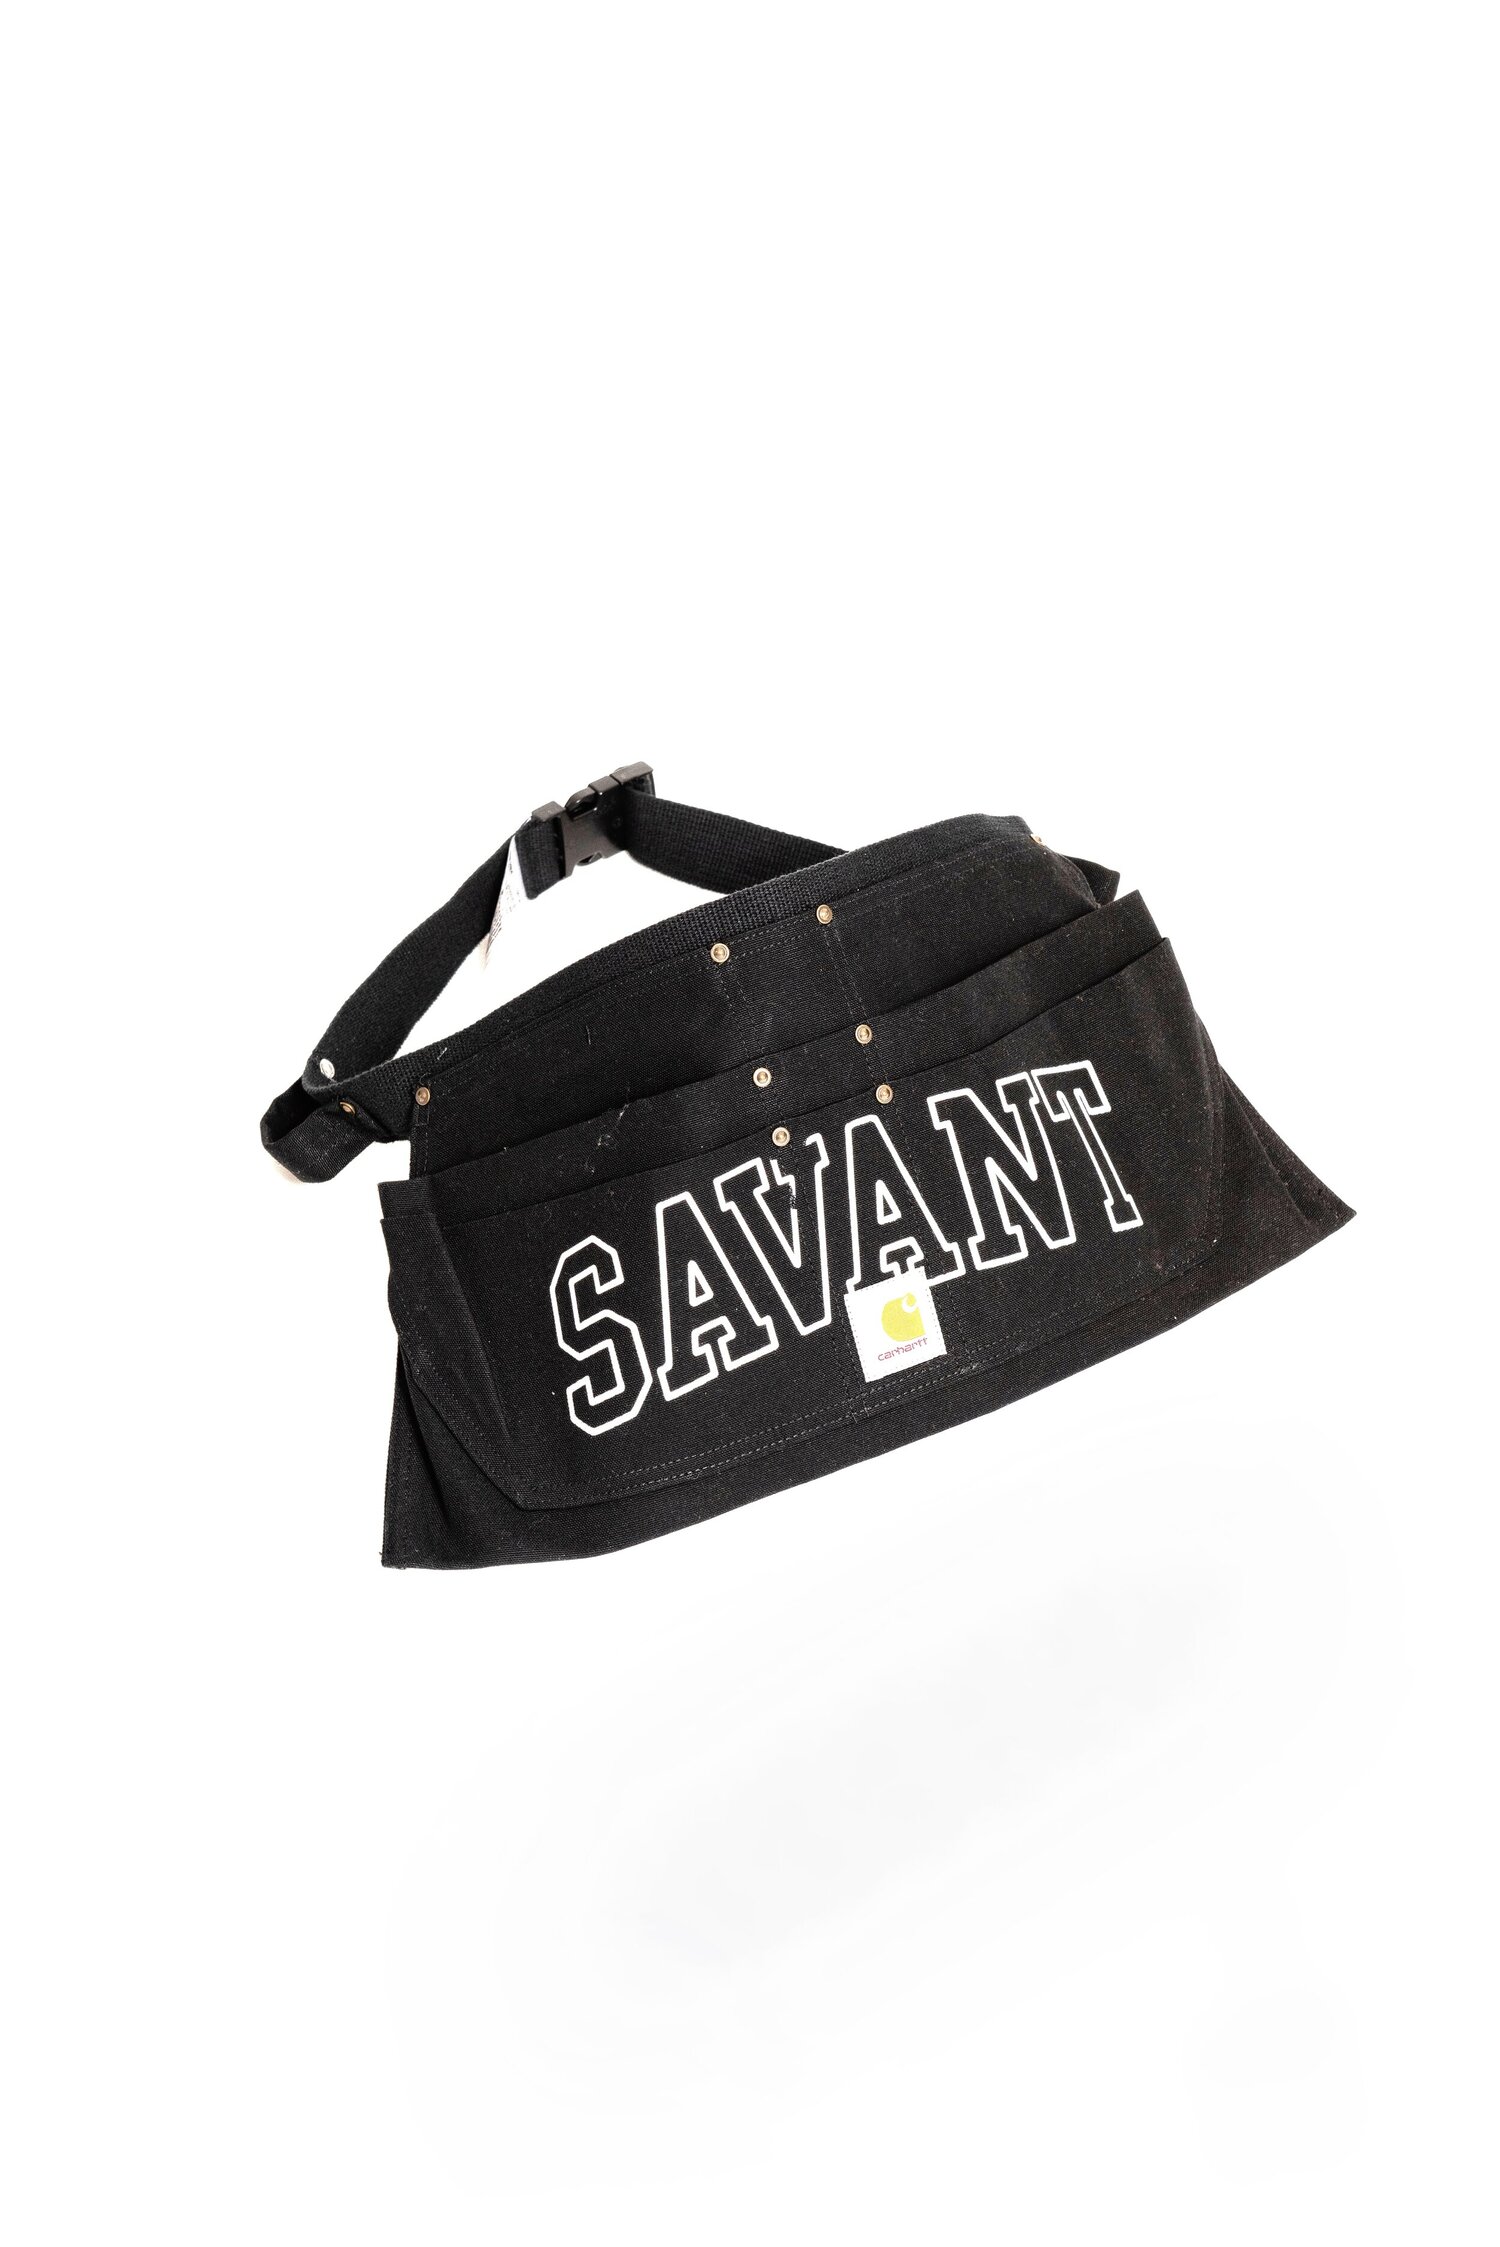 Savant Carhartt Cross Body Bag and Belt — Savant Studios